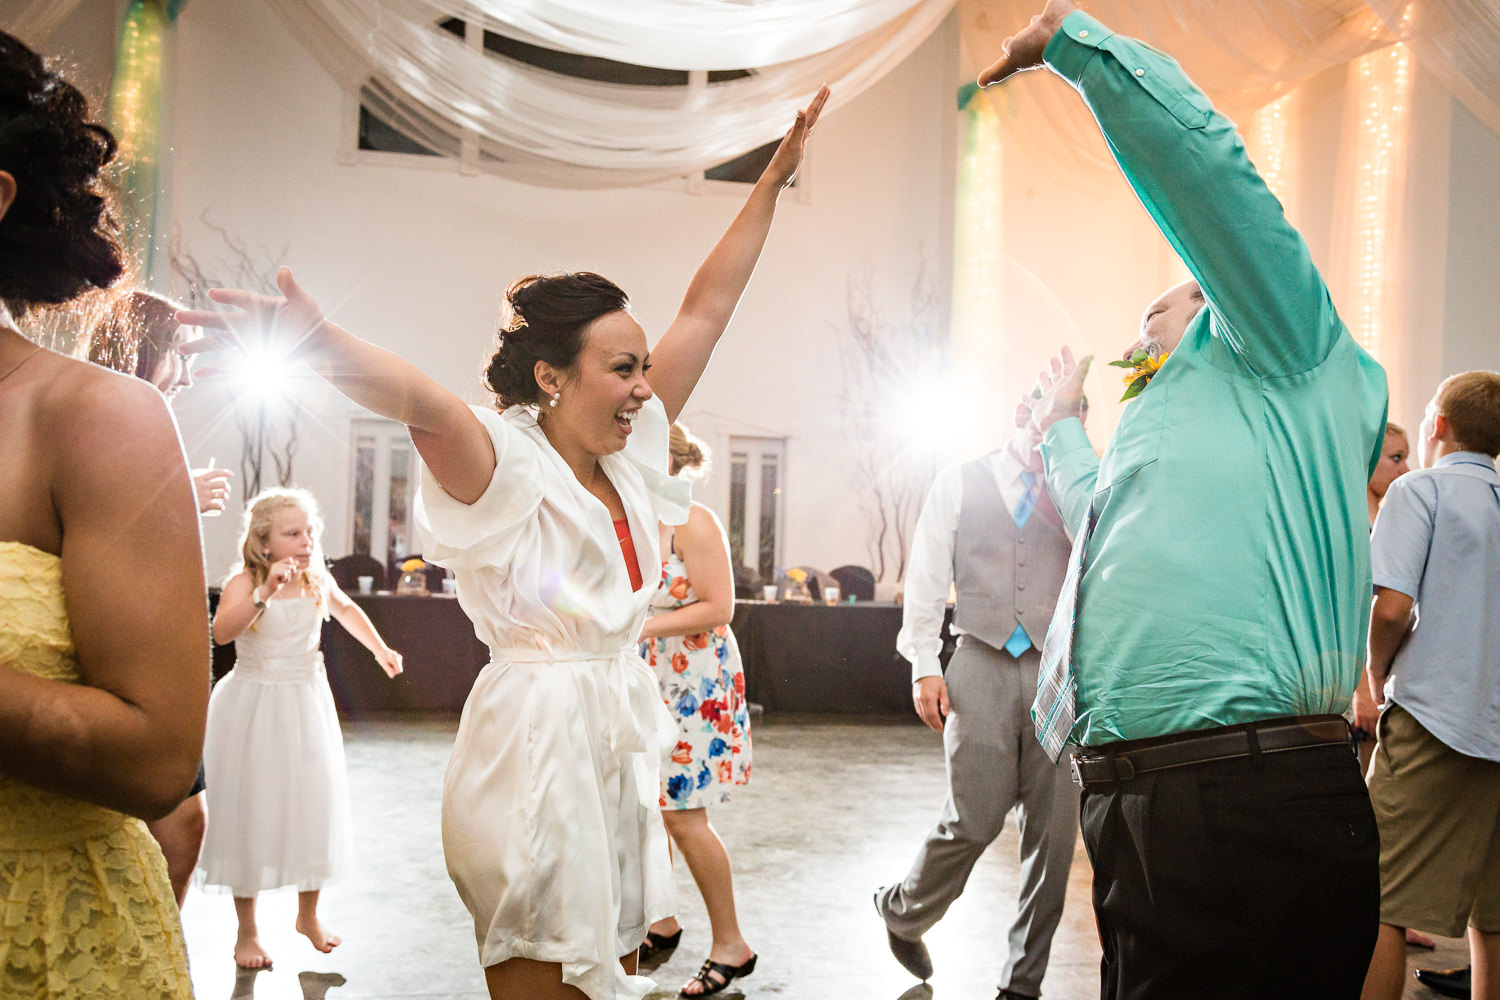 billings-montana-chanceys-wedding-reception-dad-dances-with-daughter.jpg